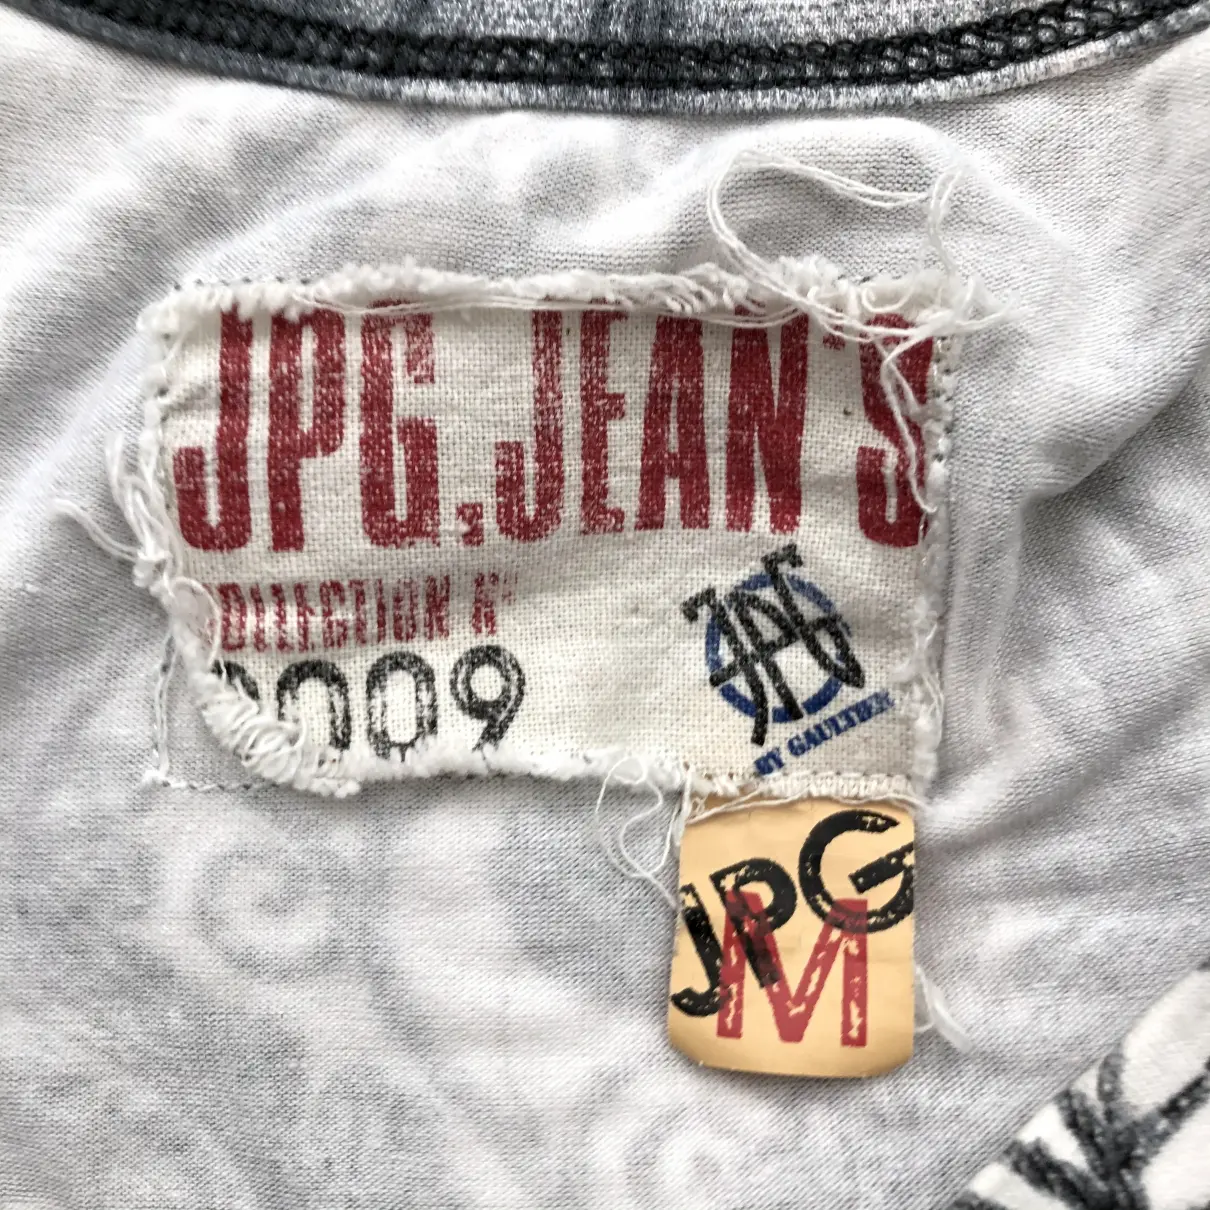 T-shirt Jean Paul Gaultier - Vintage